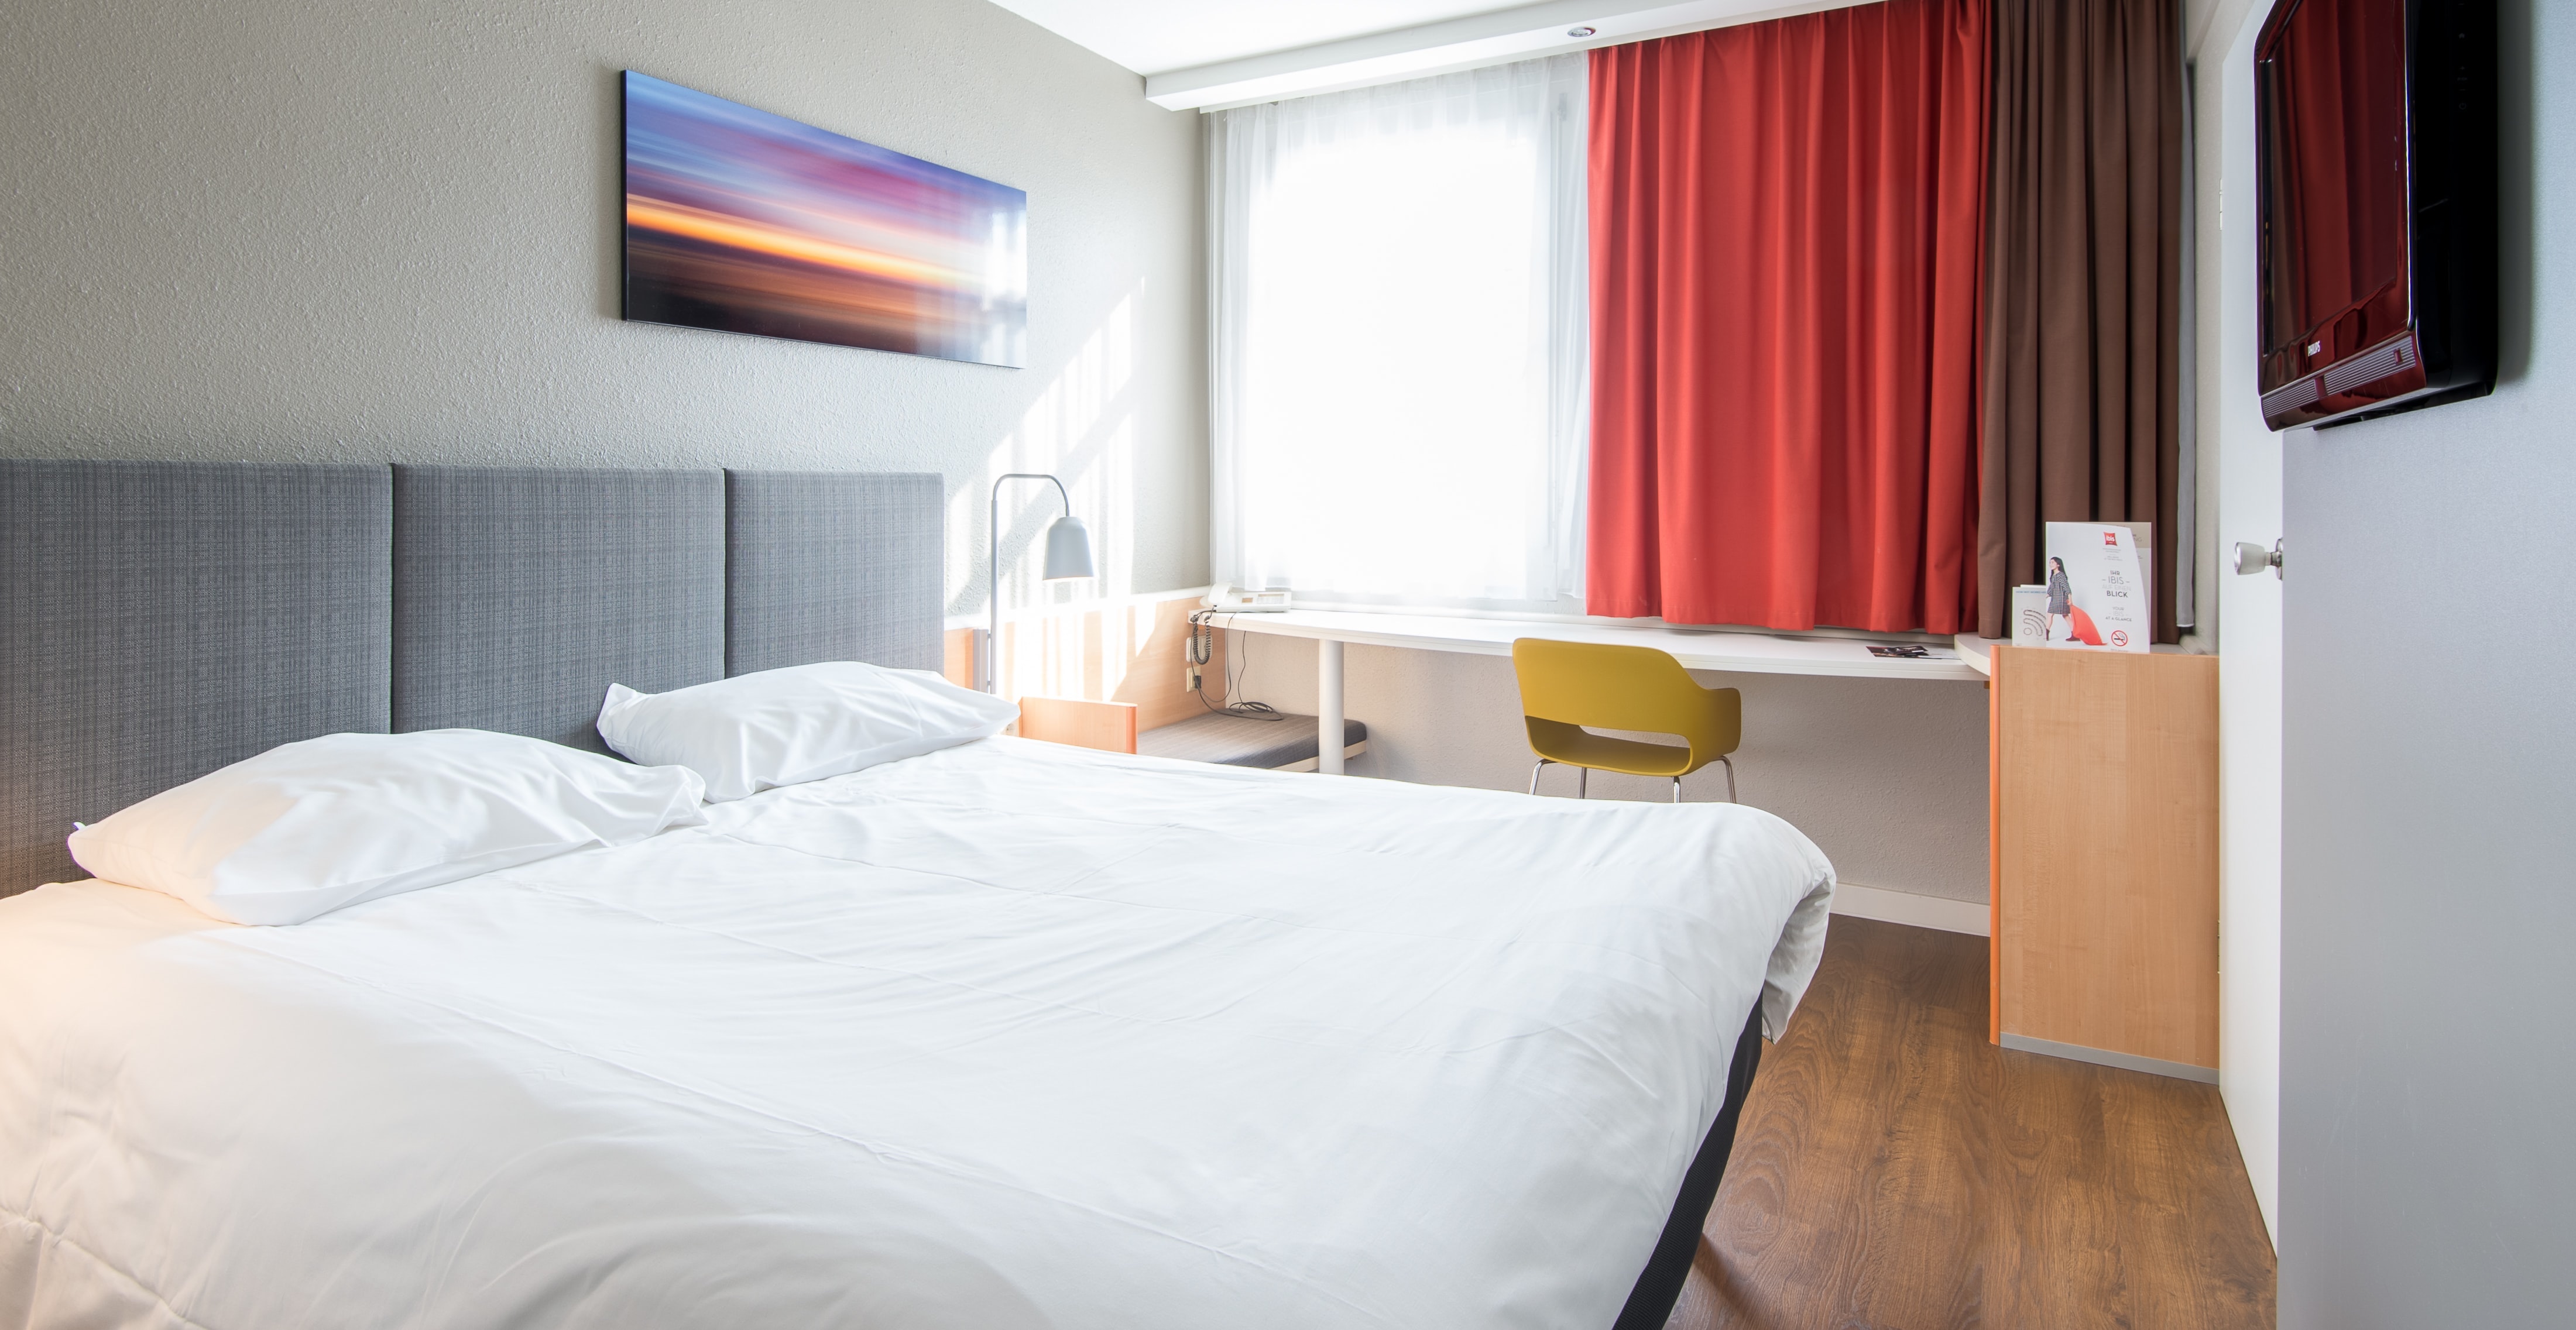 Verborgen camera in Airbnb of hotelkamer? Zo vind je ze